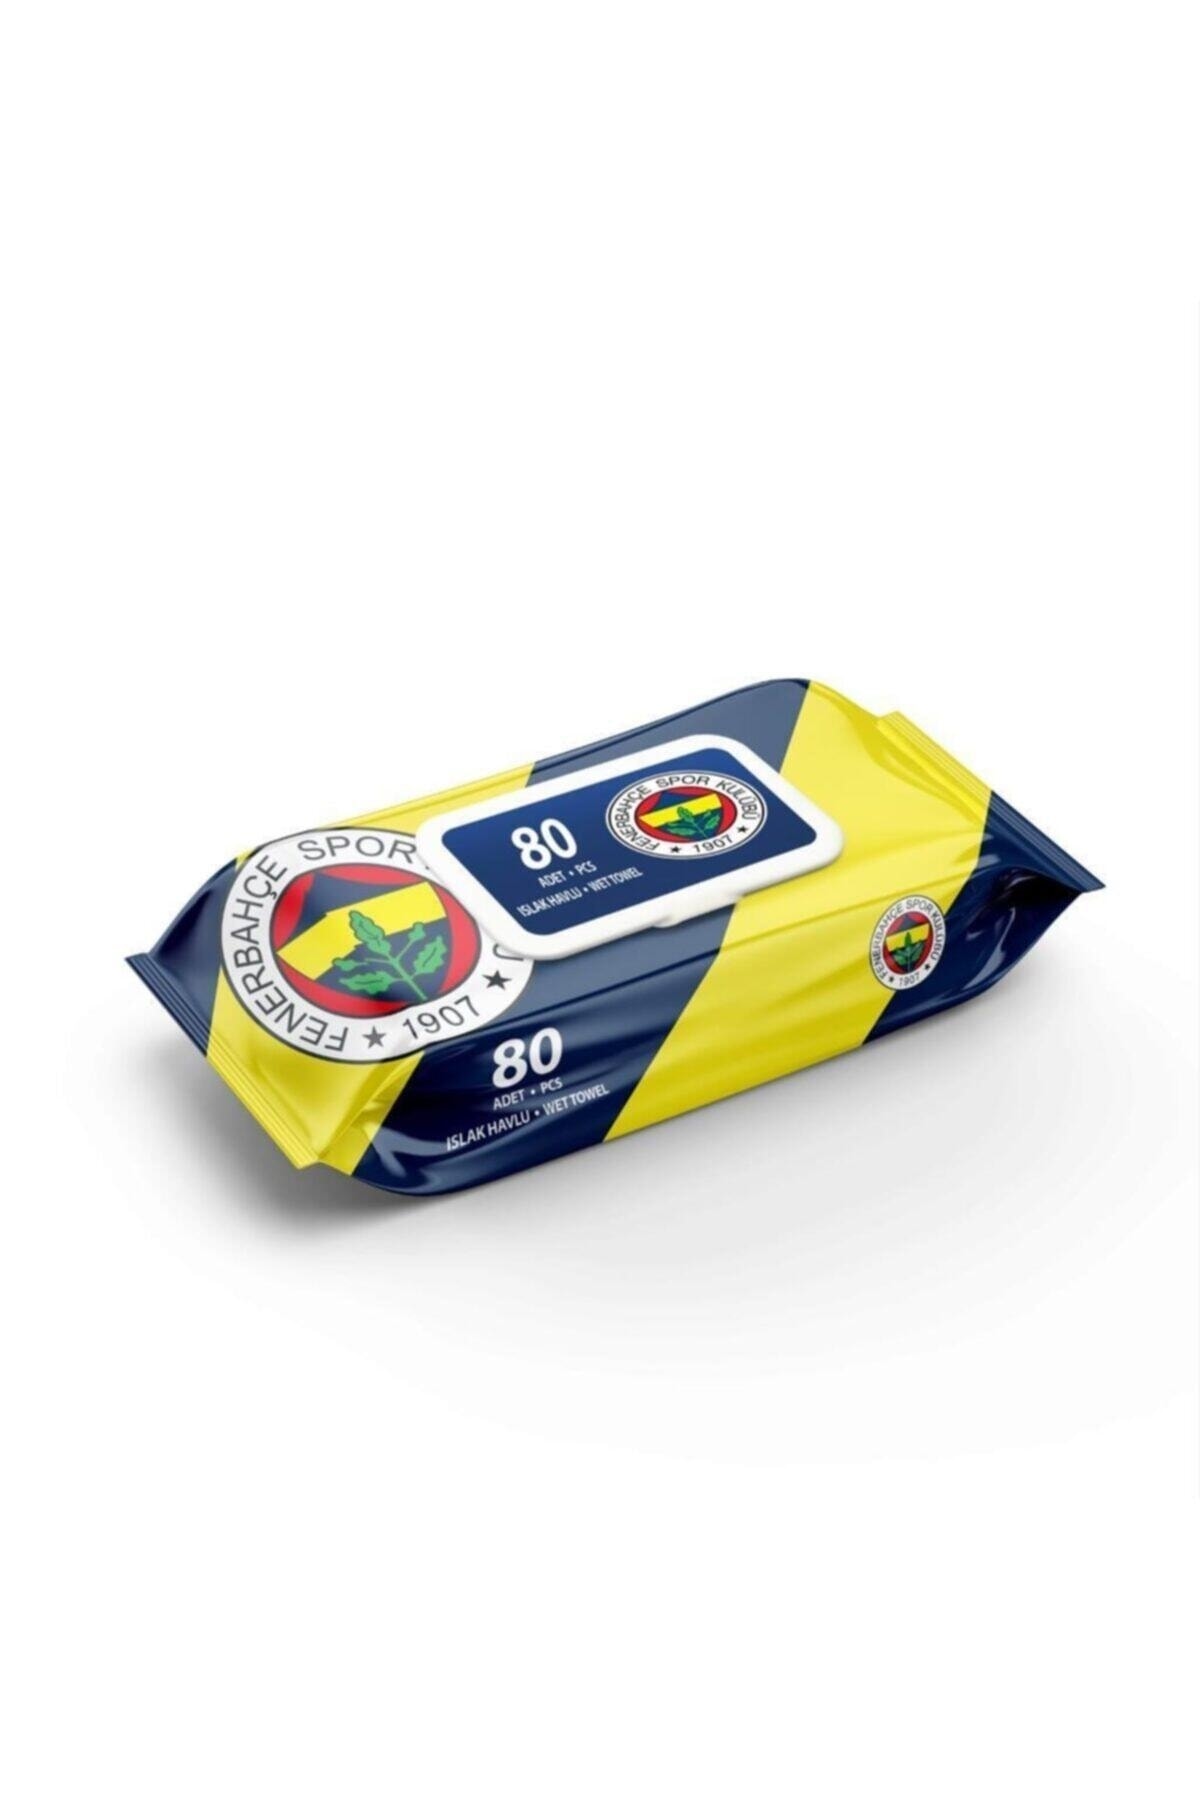 TRUVA Fenerbahçe Taraftar Islak Mendil 80 Yaprak